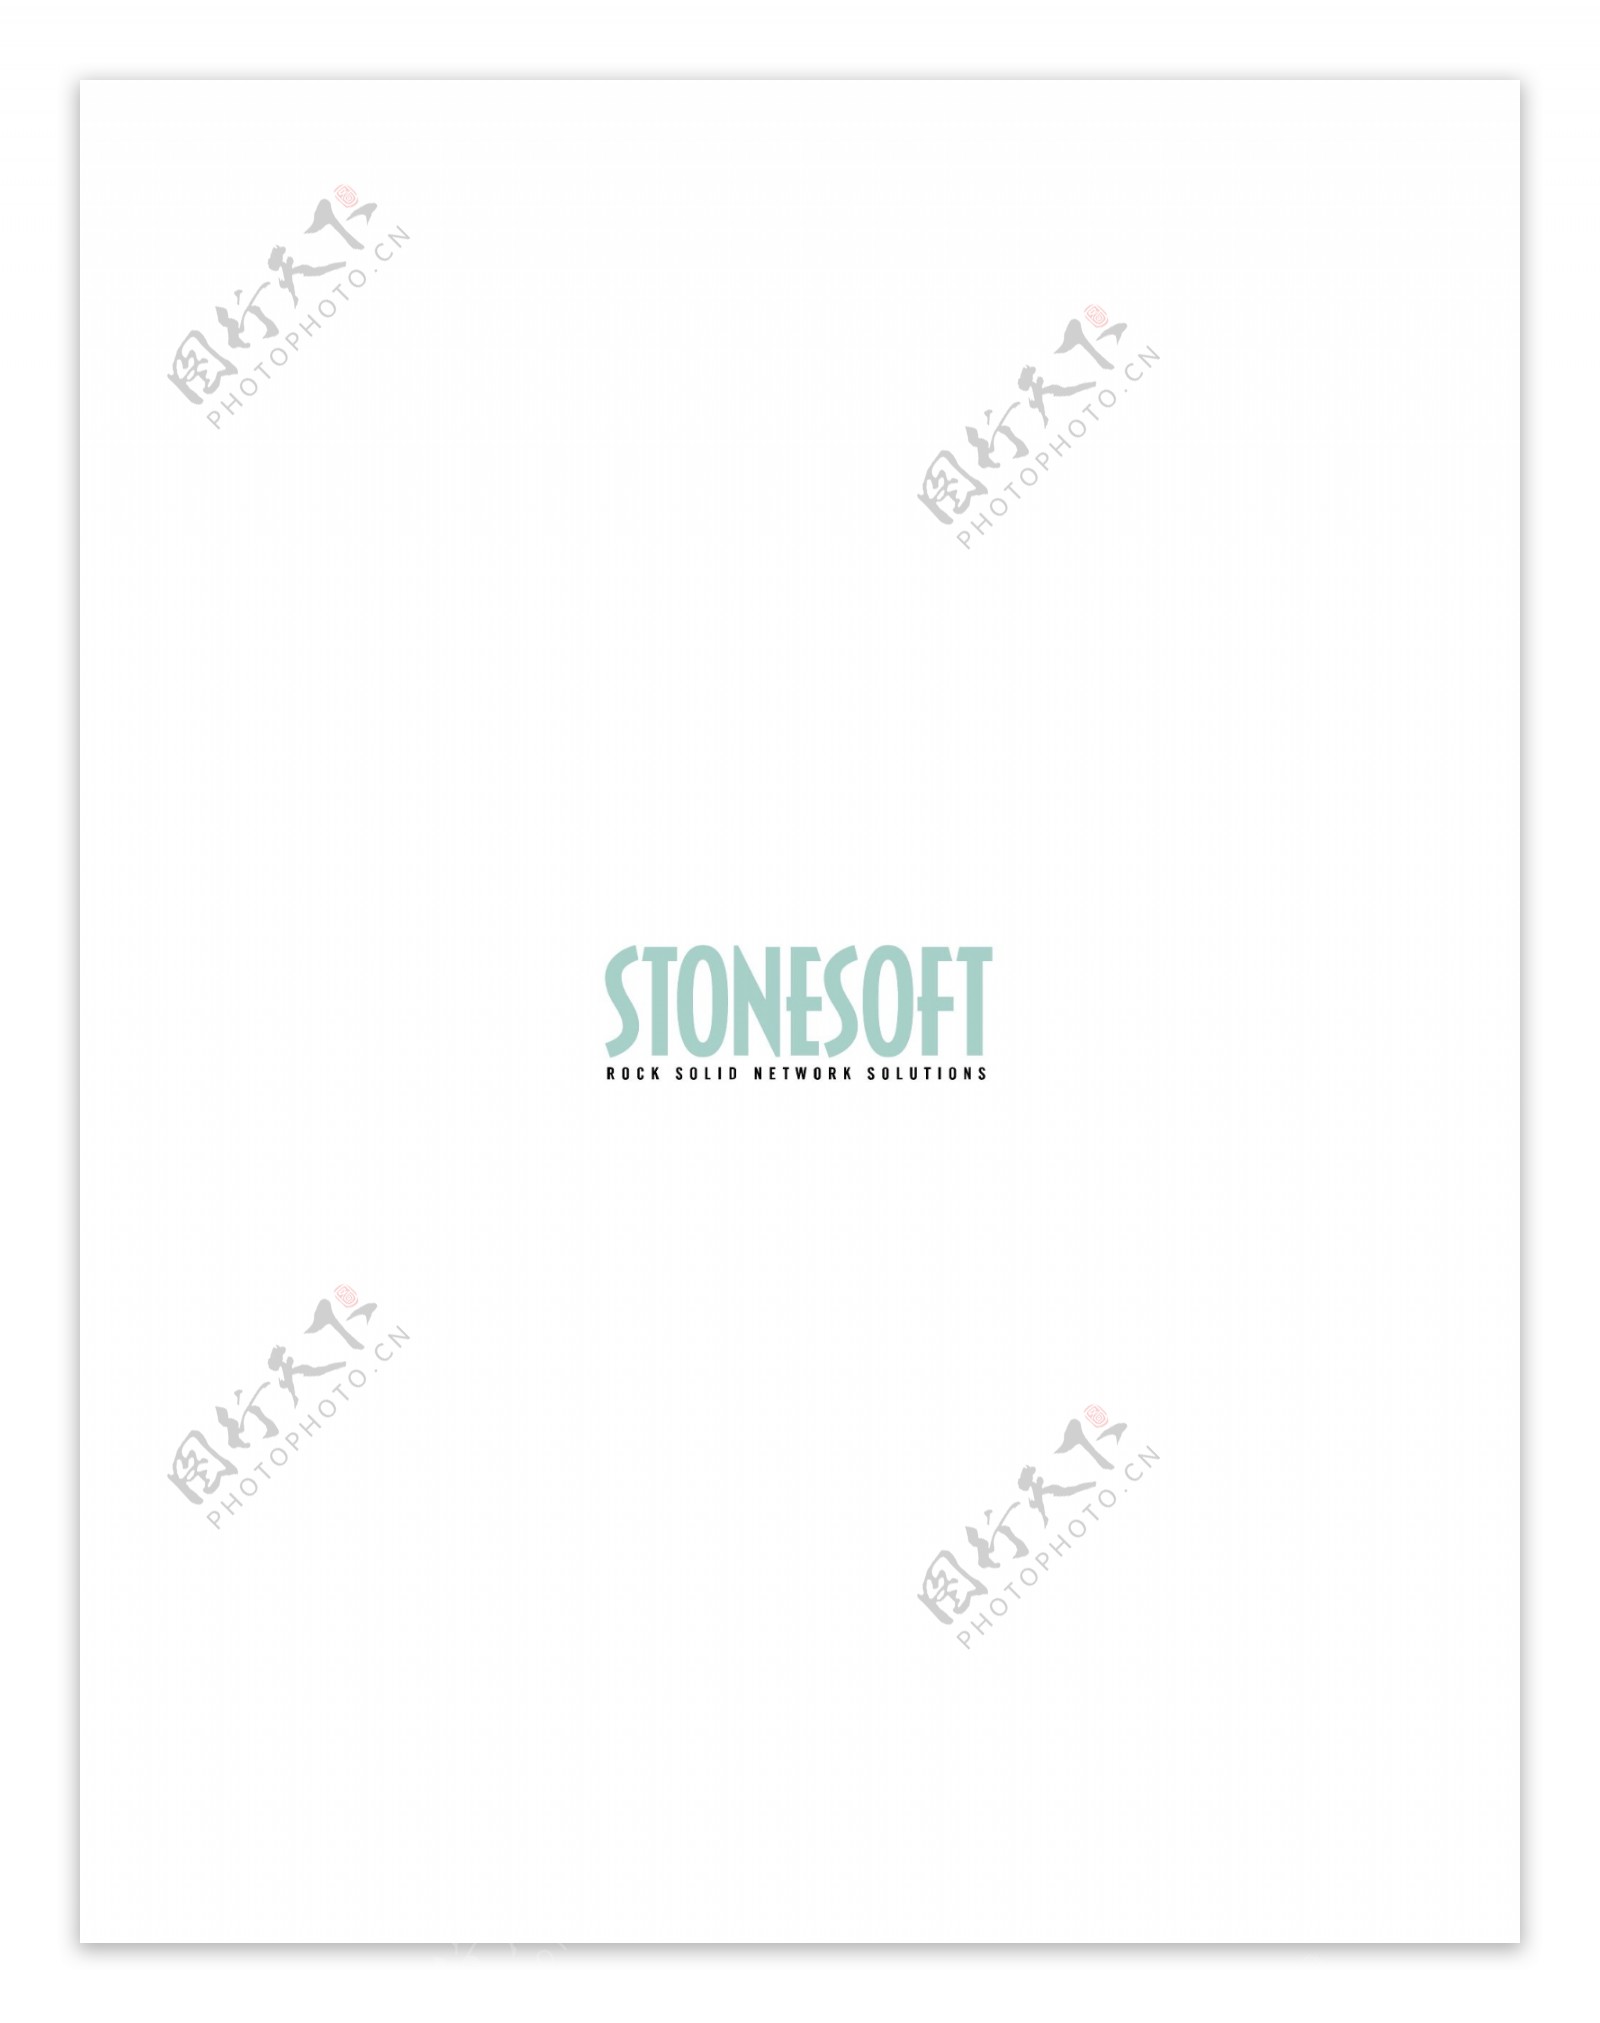 Stonesoftlogo设计欣赏足球队队徽LOGO设计Stonesoft下载标志设计欣赏